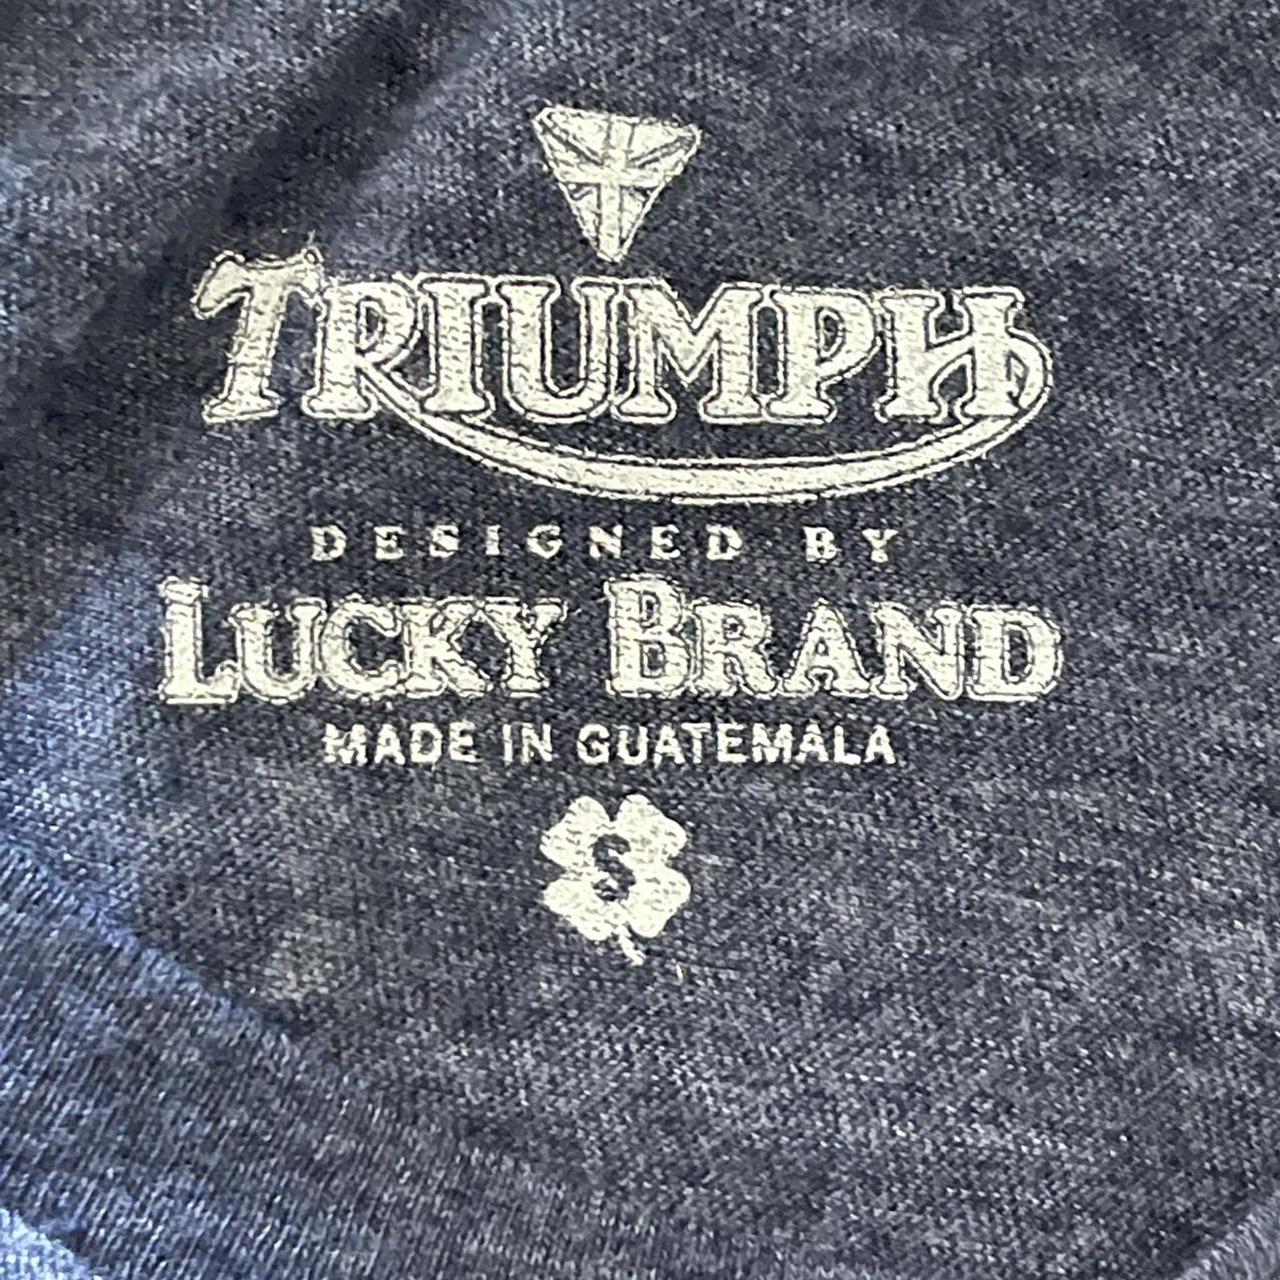 Lucky Brand Triumph apparel in Marshall's : r/Triumph